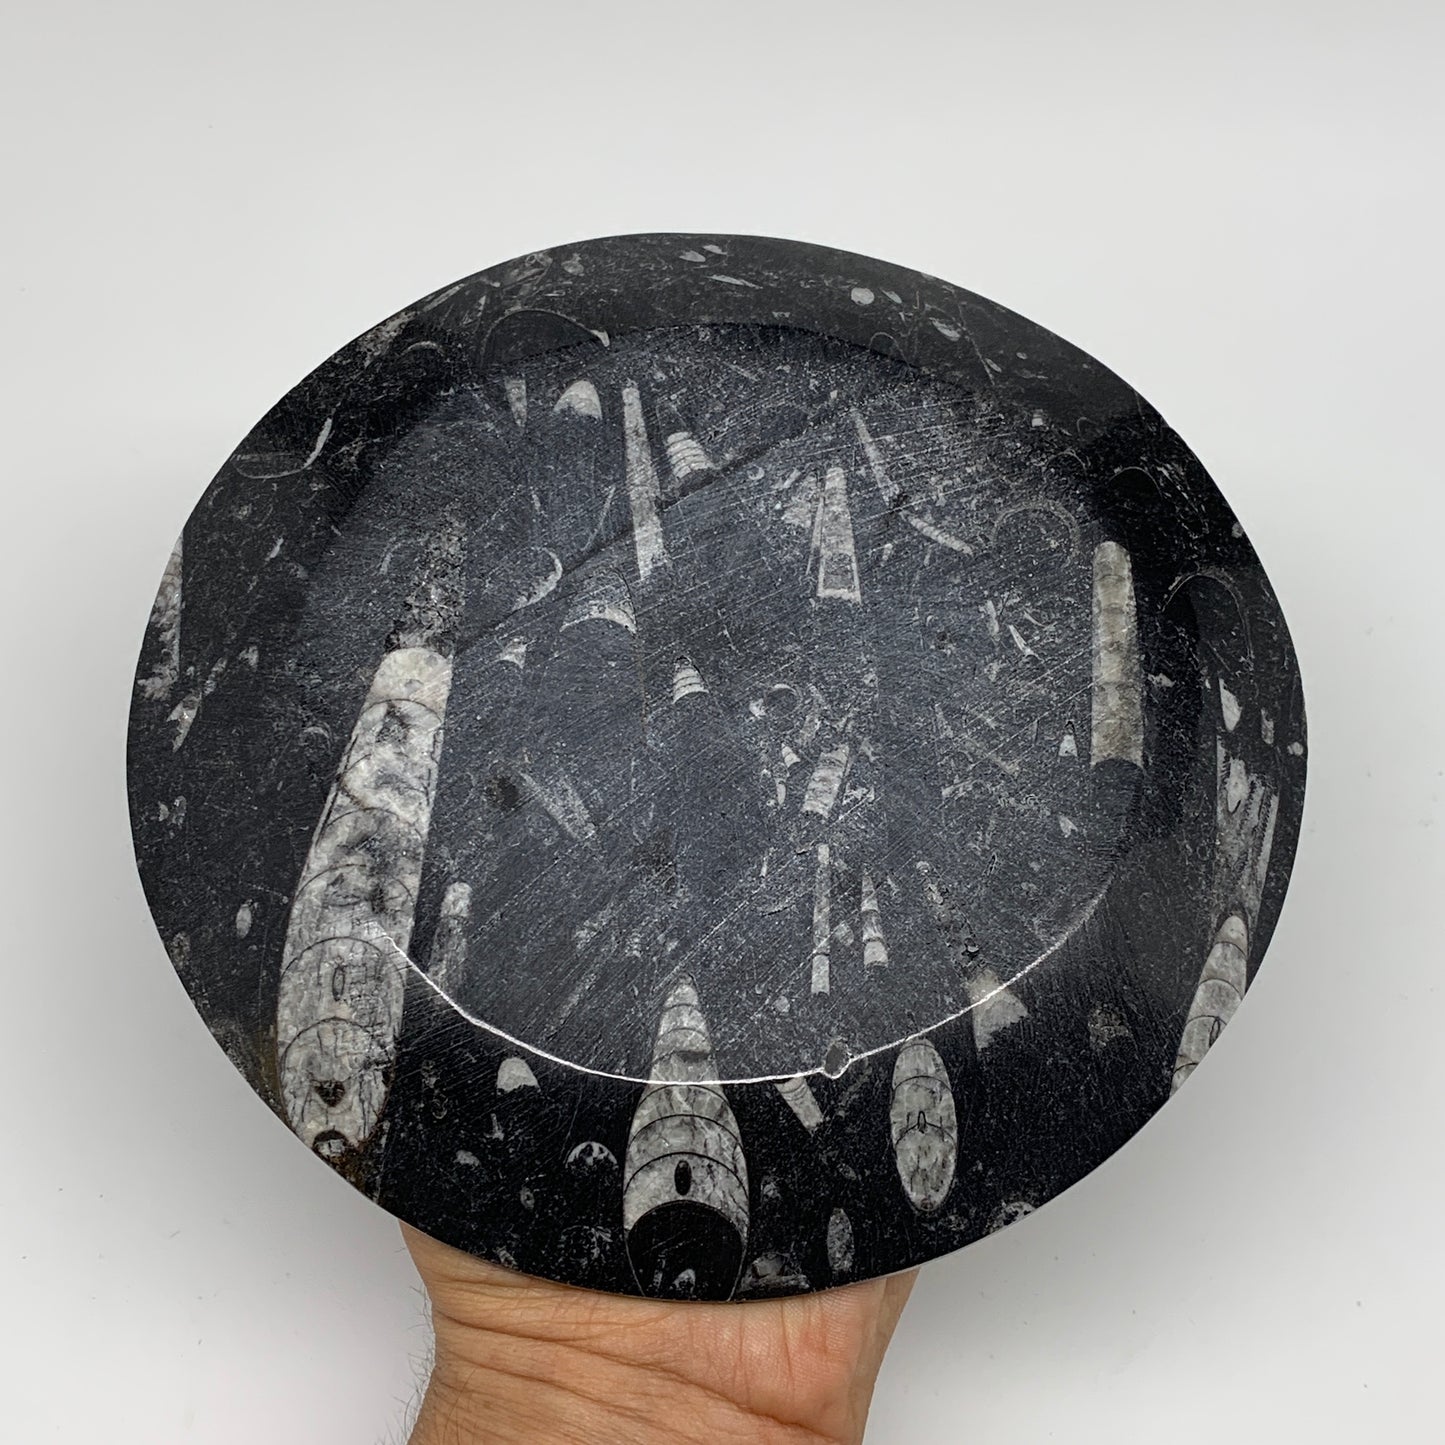 1070g, 2pcs Set,7" Fossils Orthoceras Bowls Round Ammonite Ring  @Morocco,B8823